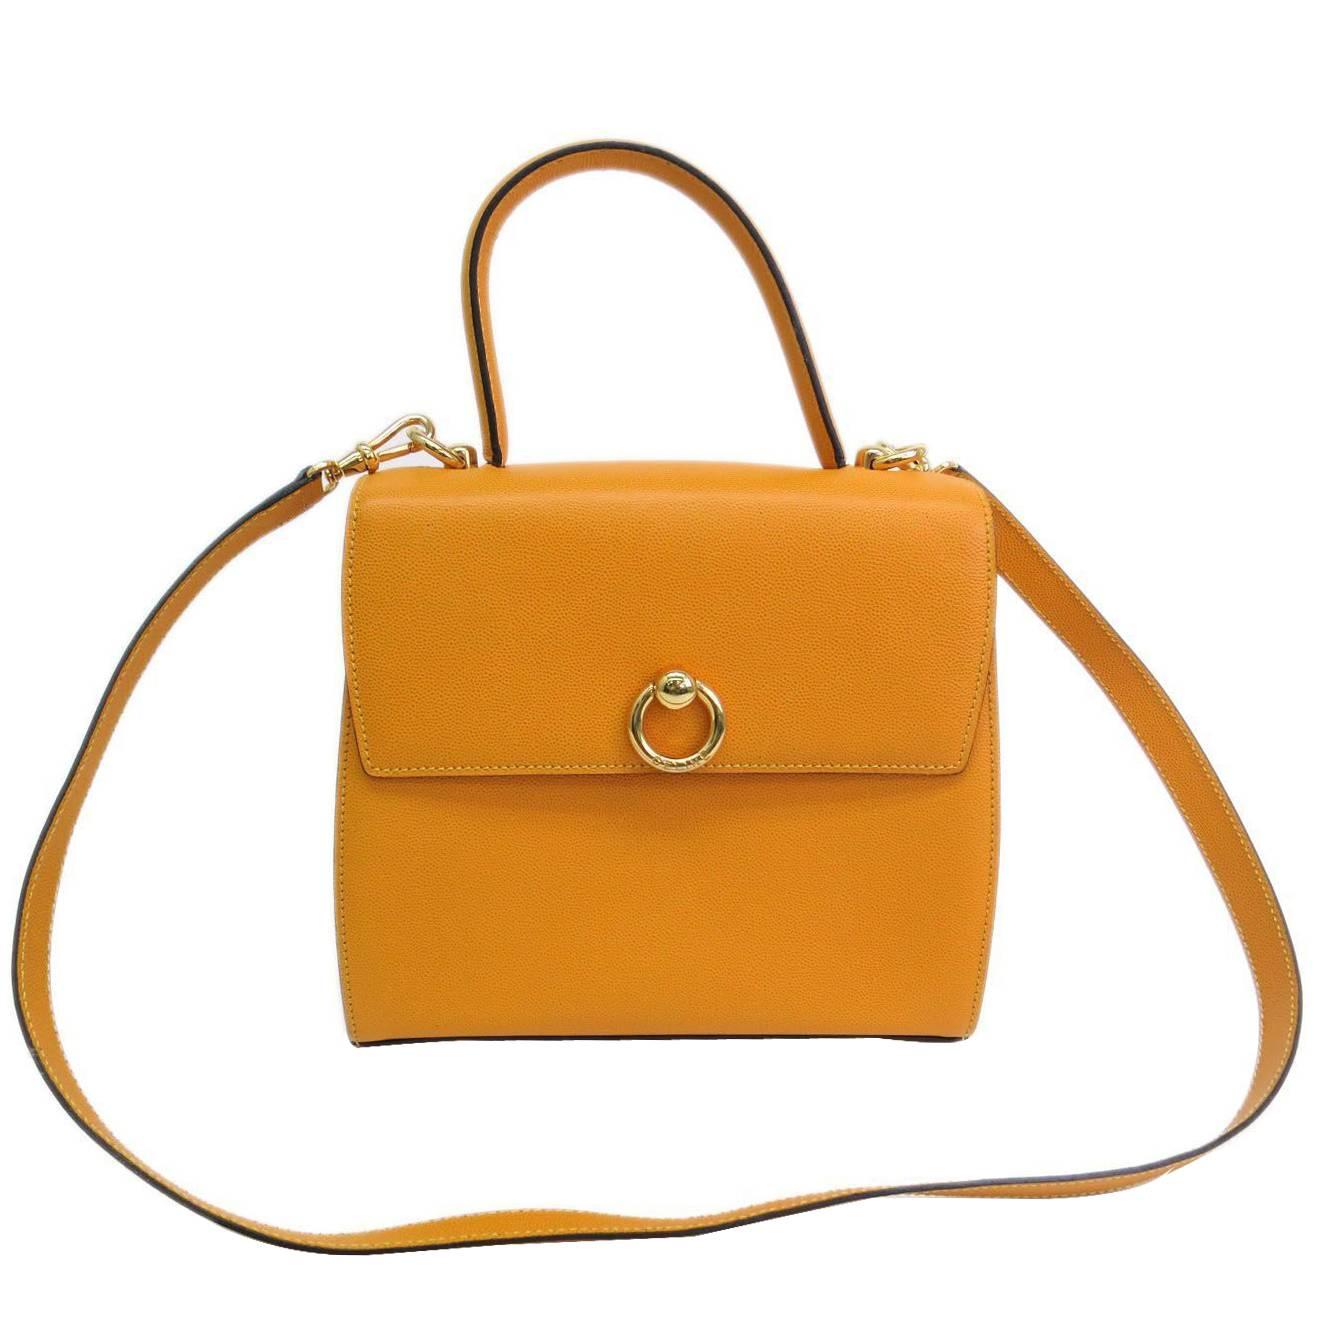 Celine Mustard Yellow Leather Box Kelly Satchel Shoulder Bag